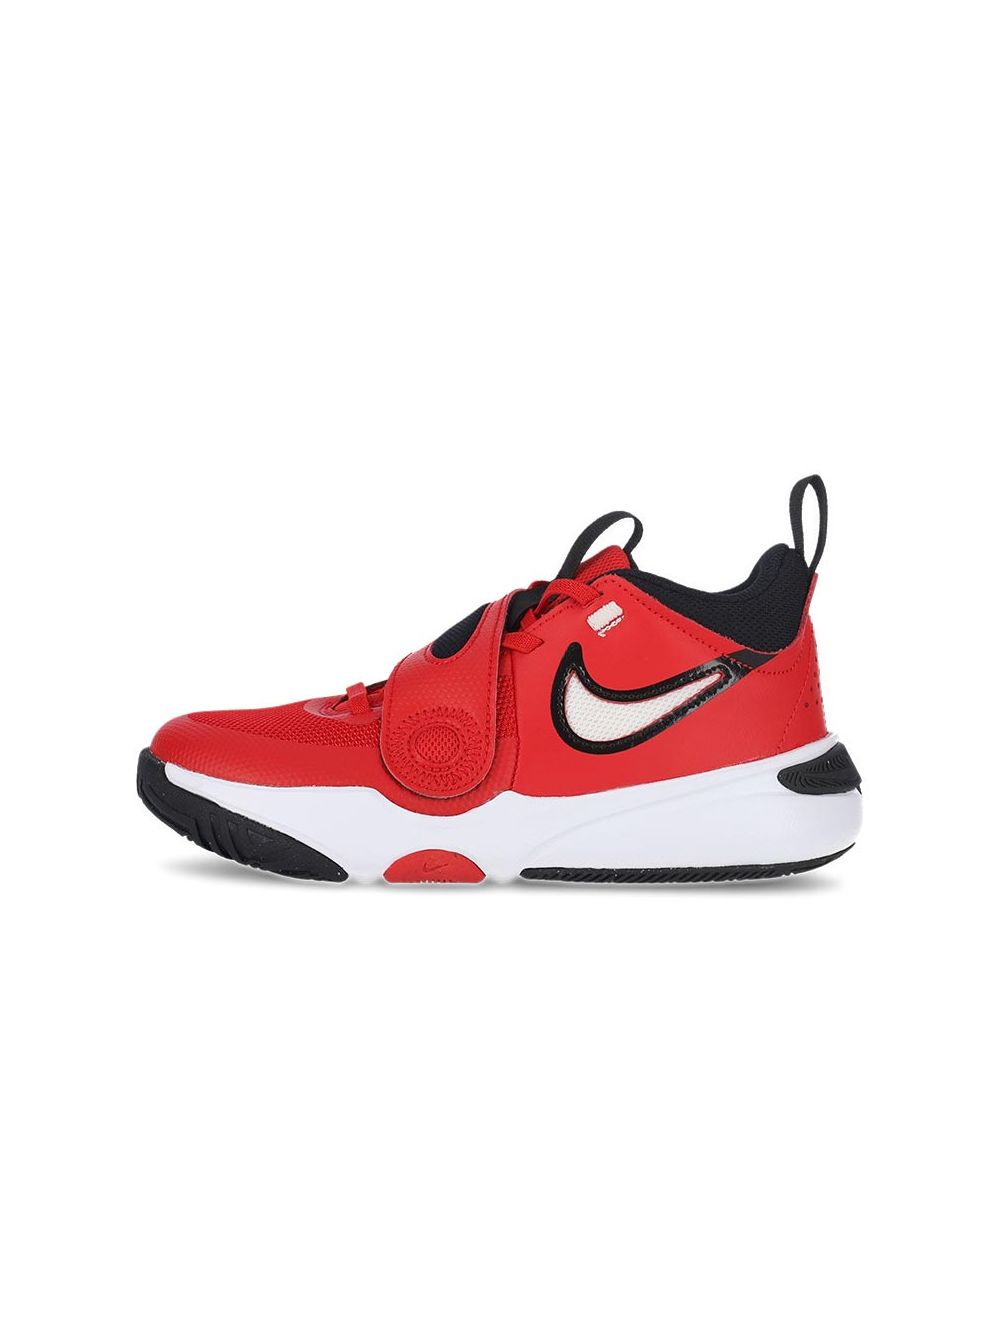  Nike Court Borough Low Recraft Boys DV5458-600 (University  RED/BL), Size 2